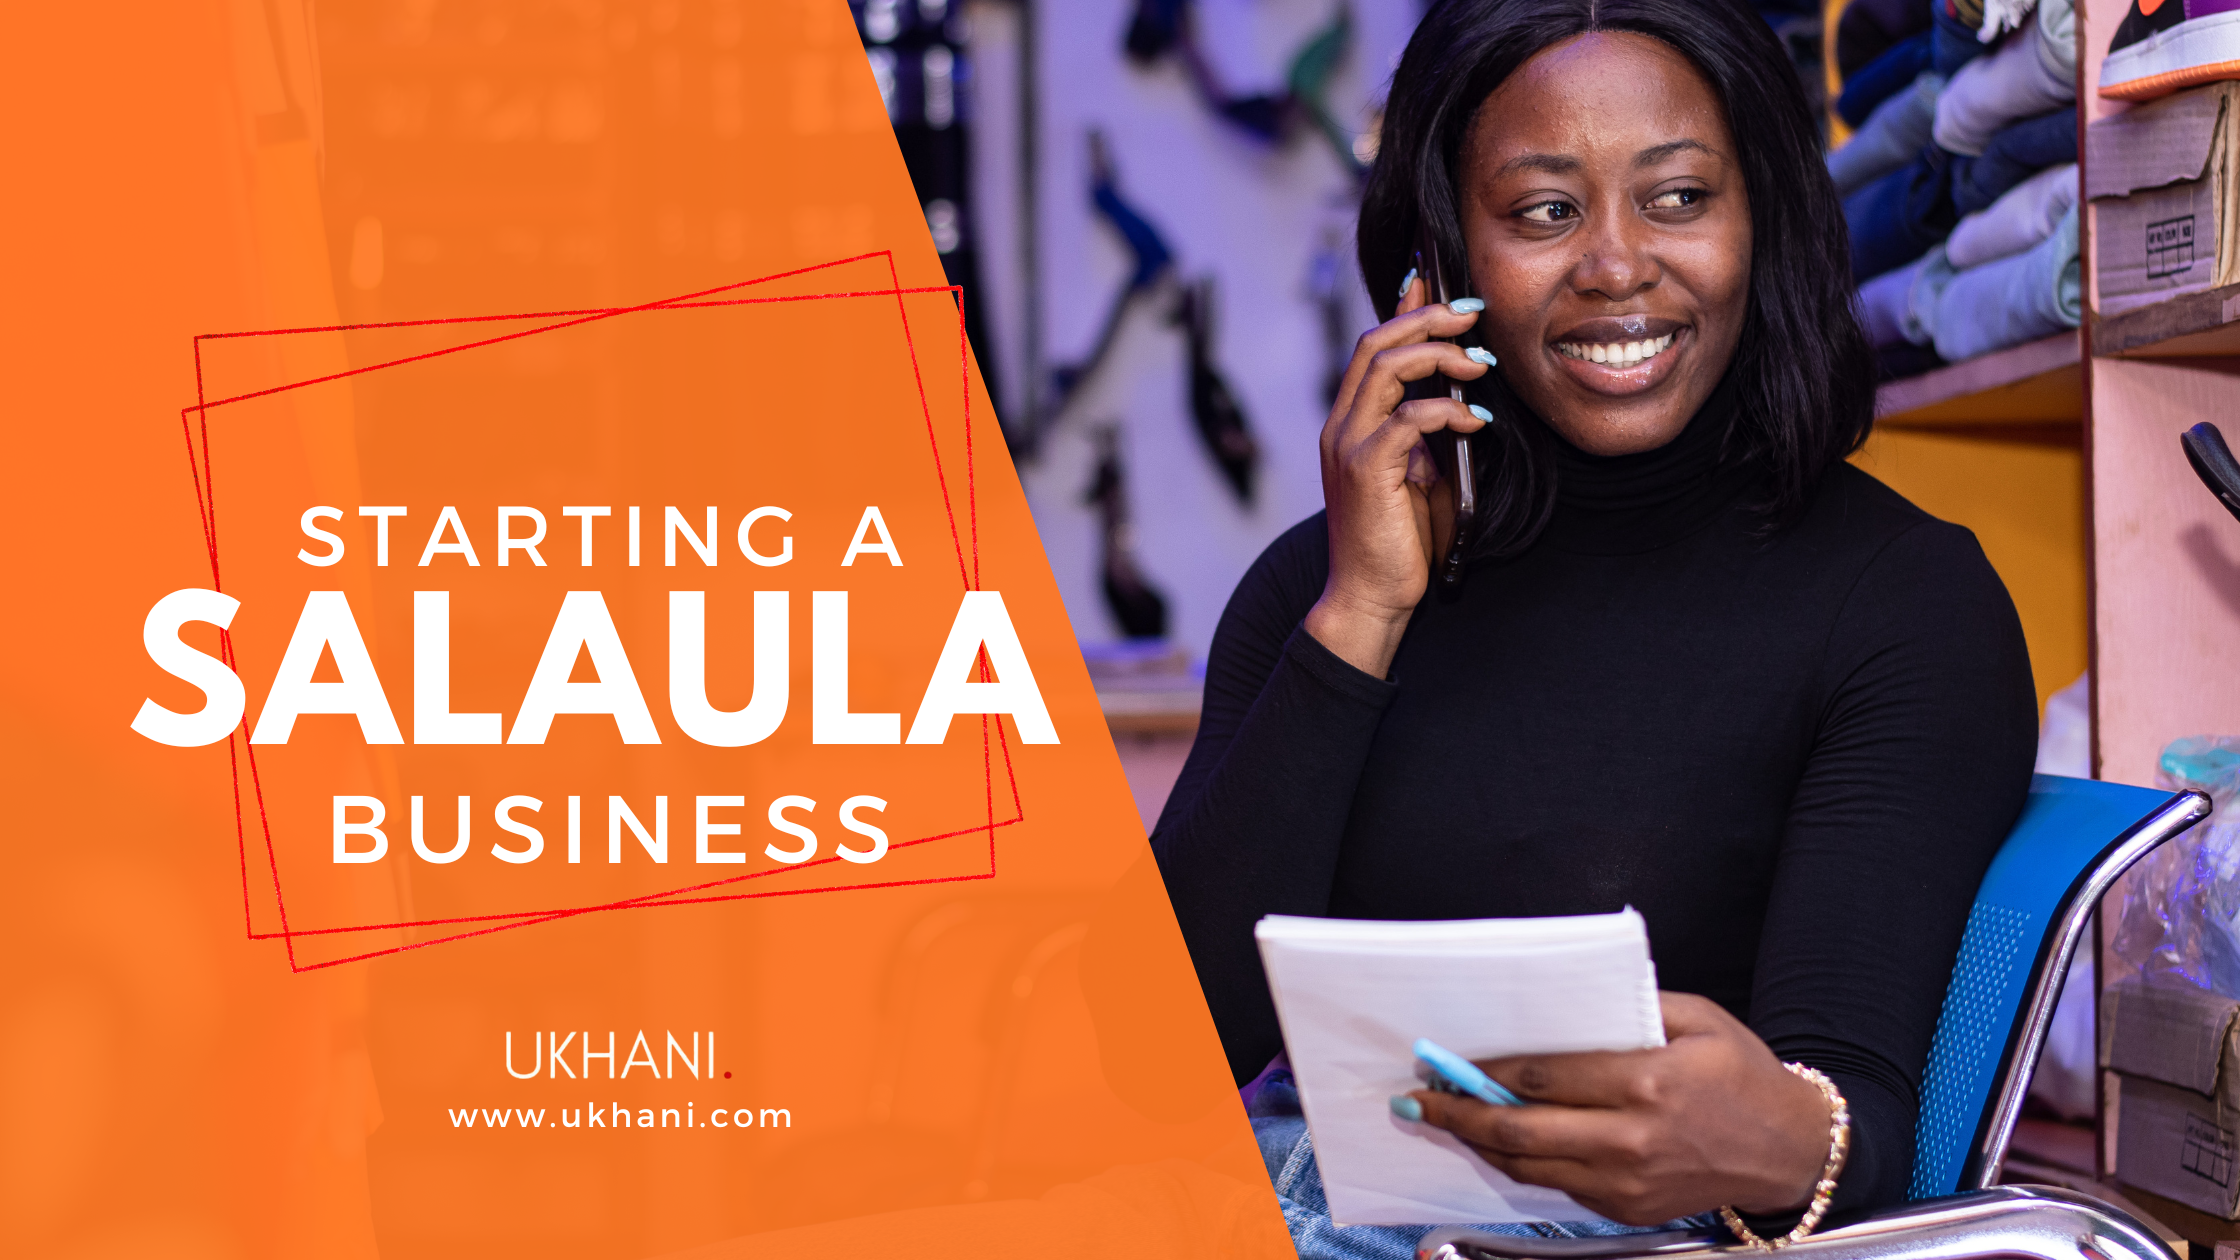 salaula business in zambia